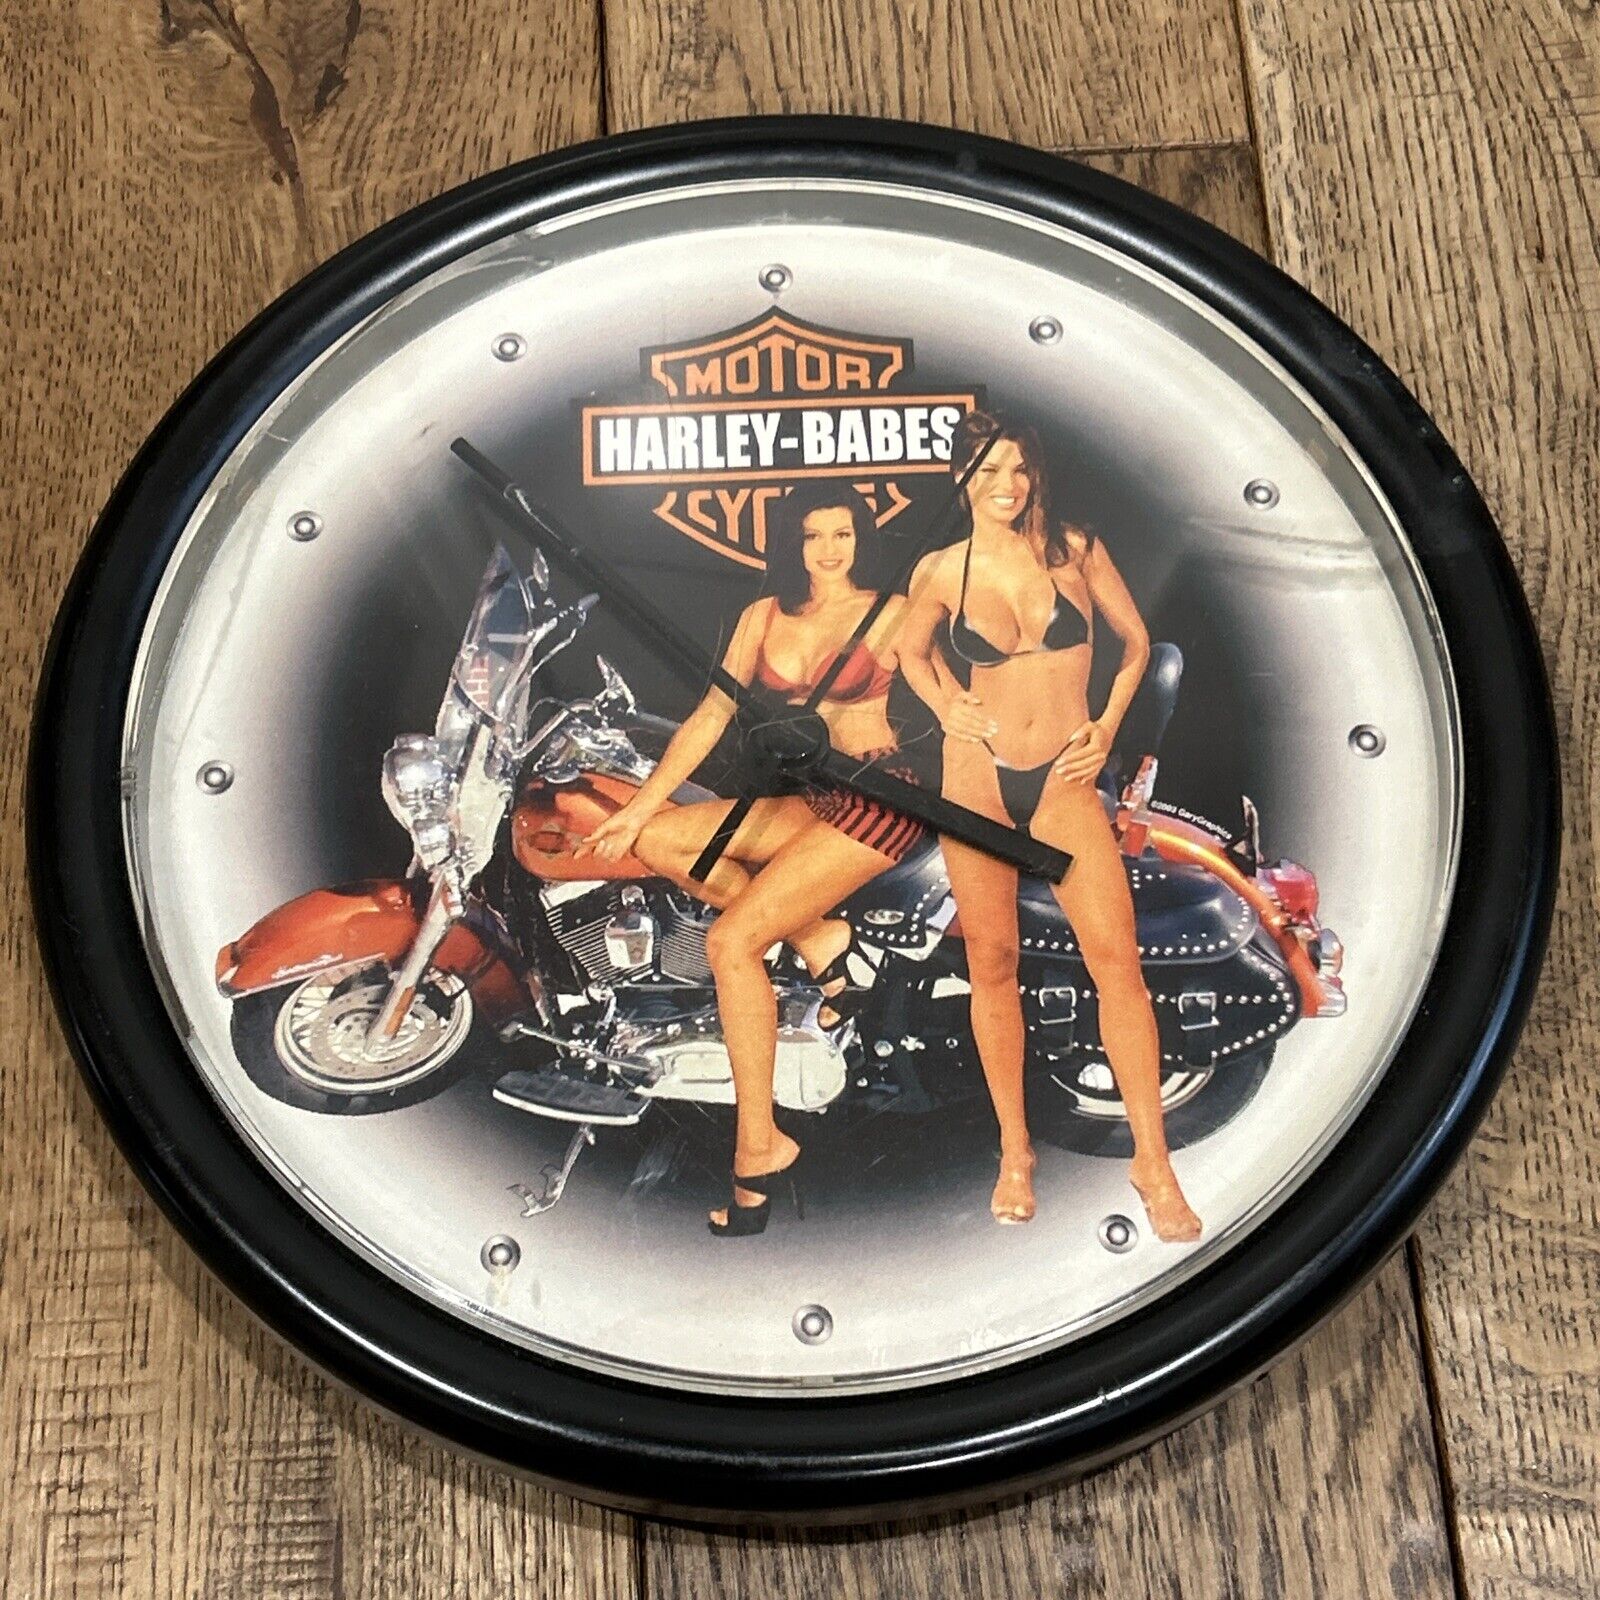 Vintage 9” Harley Davidson Motorcycle Harley-Babes Bikini Girls Wall Clock Works